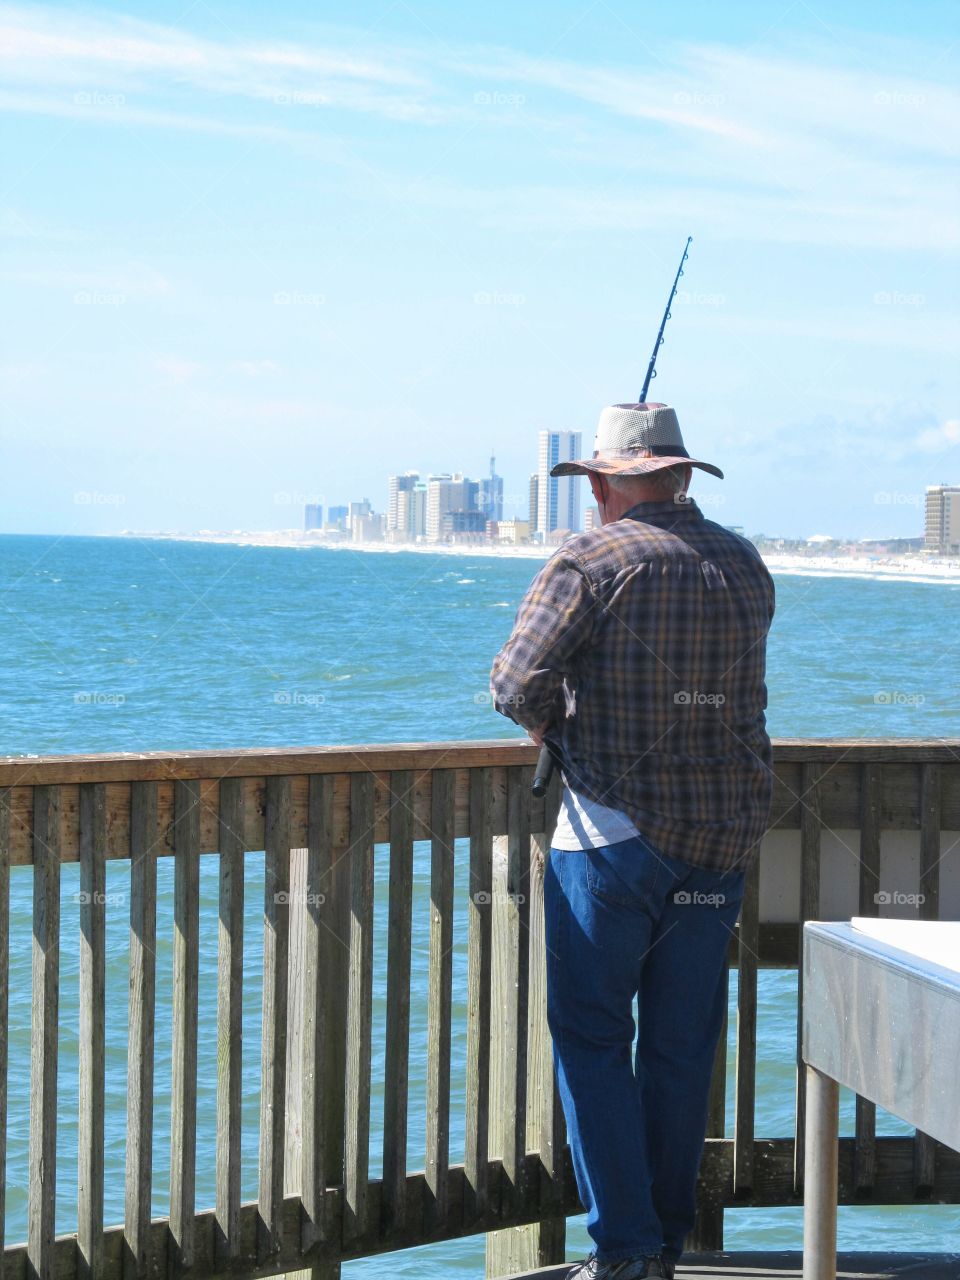 Enjoying Retirement. Loved this older gentleman fishing off the pier